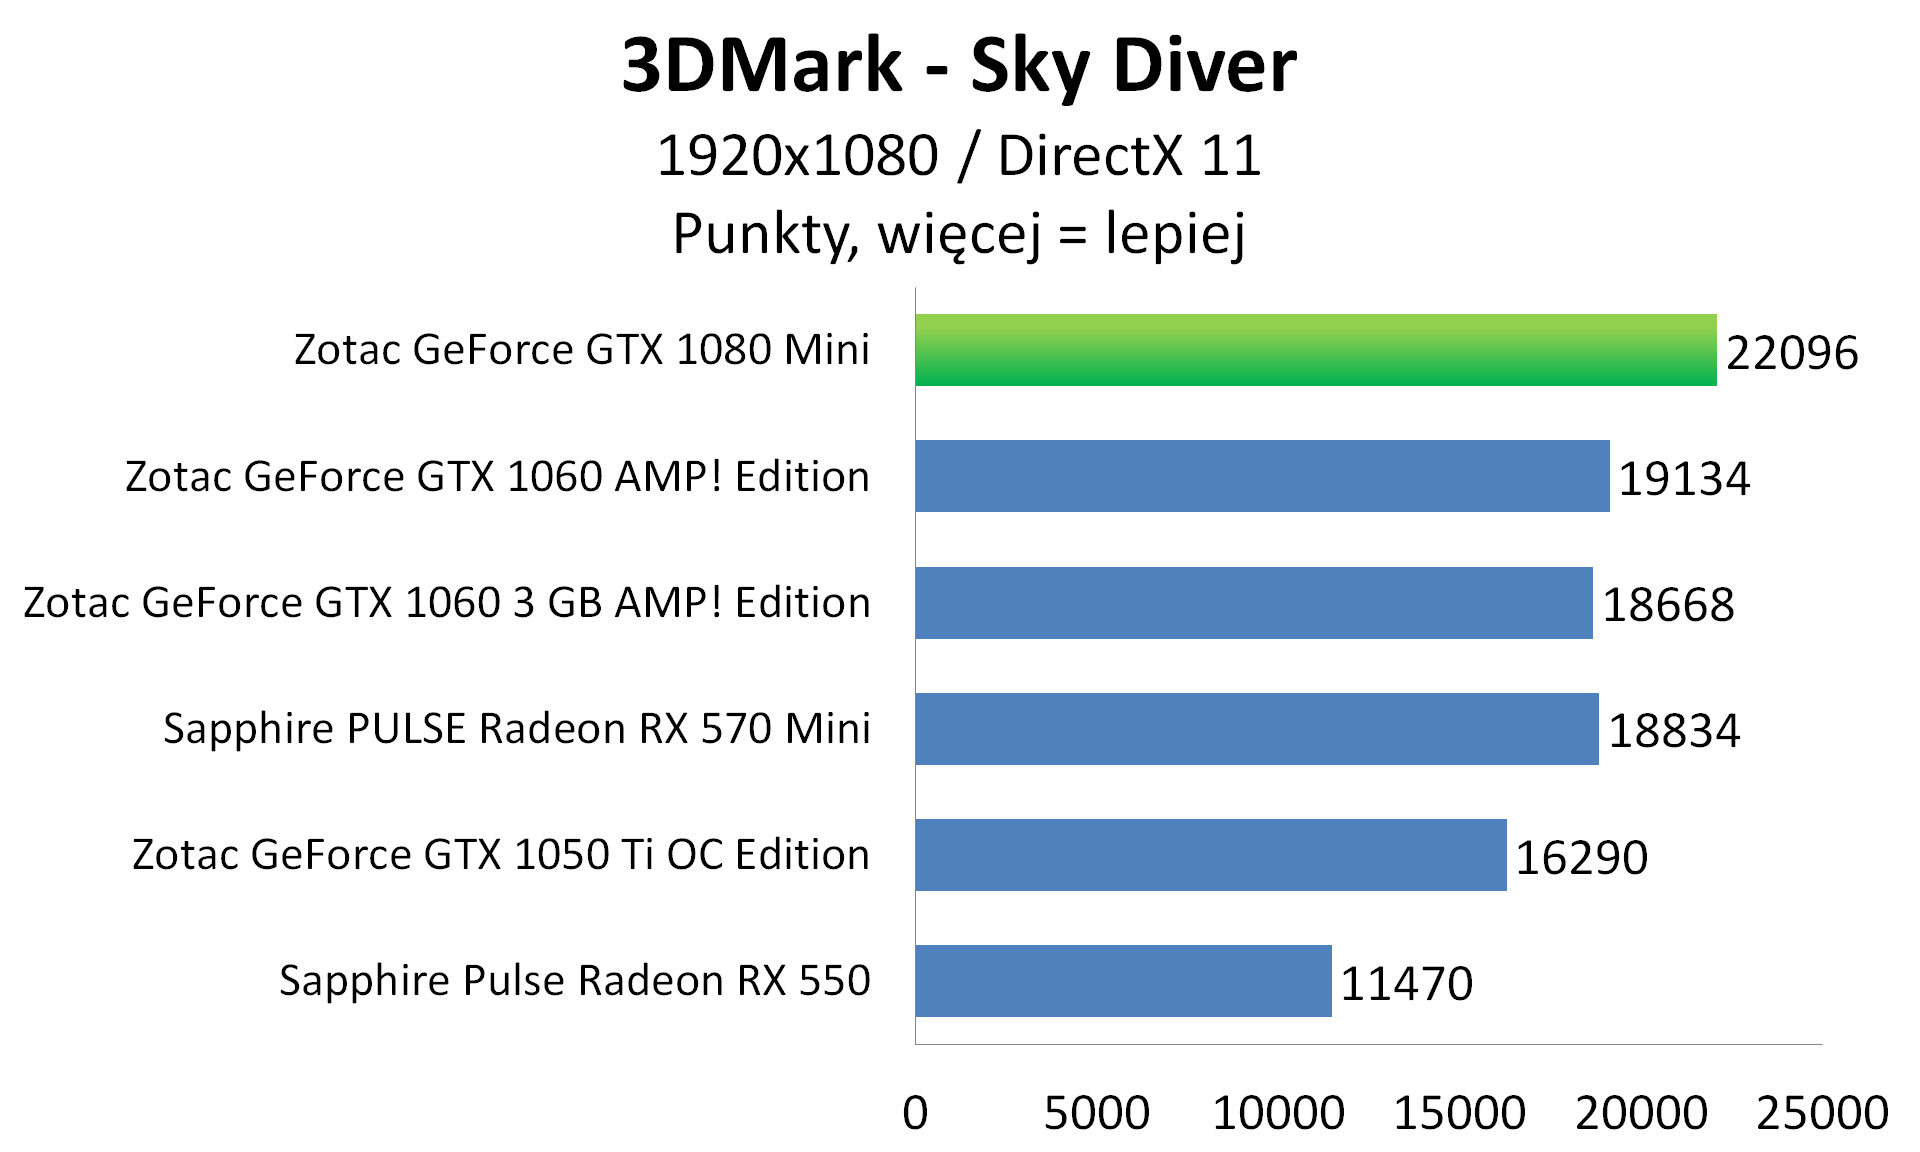 Zotac GeForce GTX 1080 Mini - 3DMark - Sky Diver